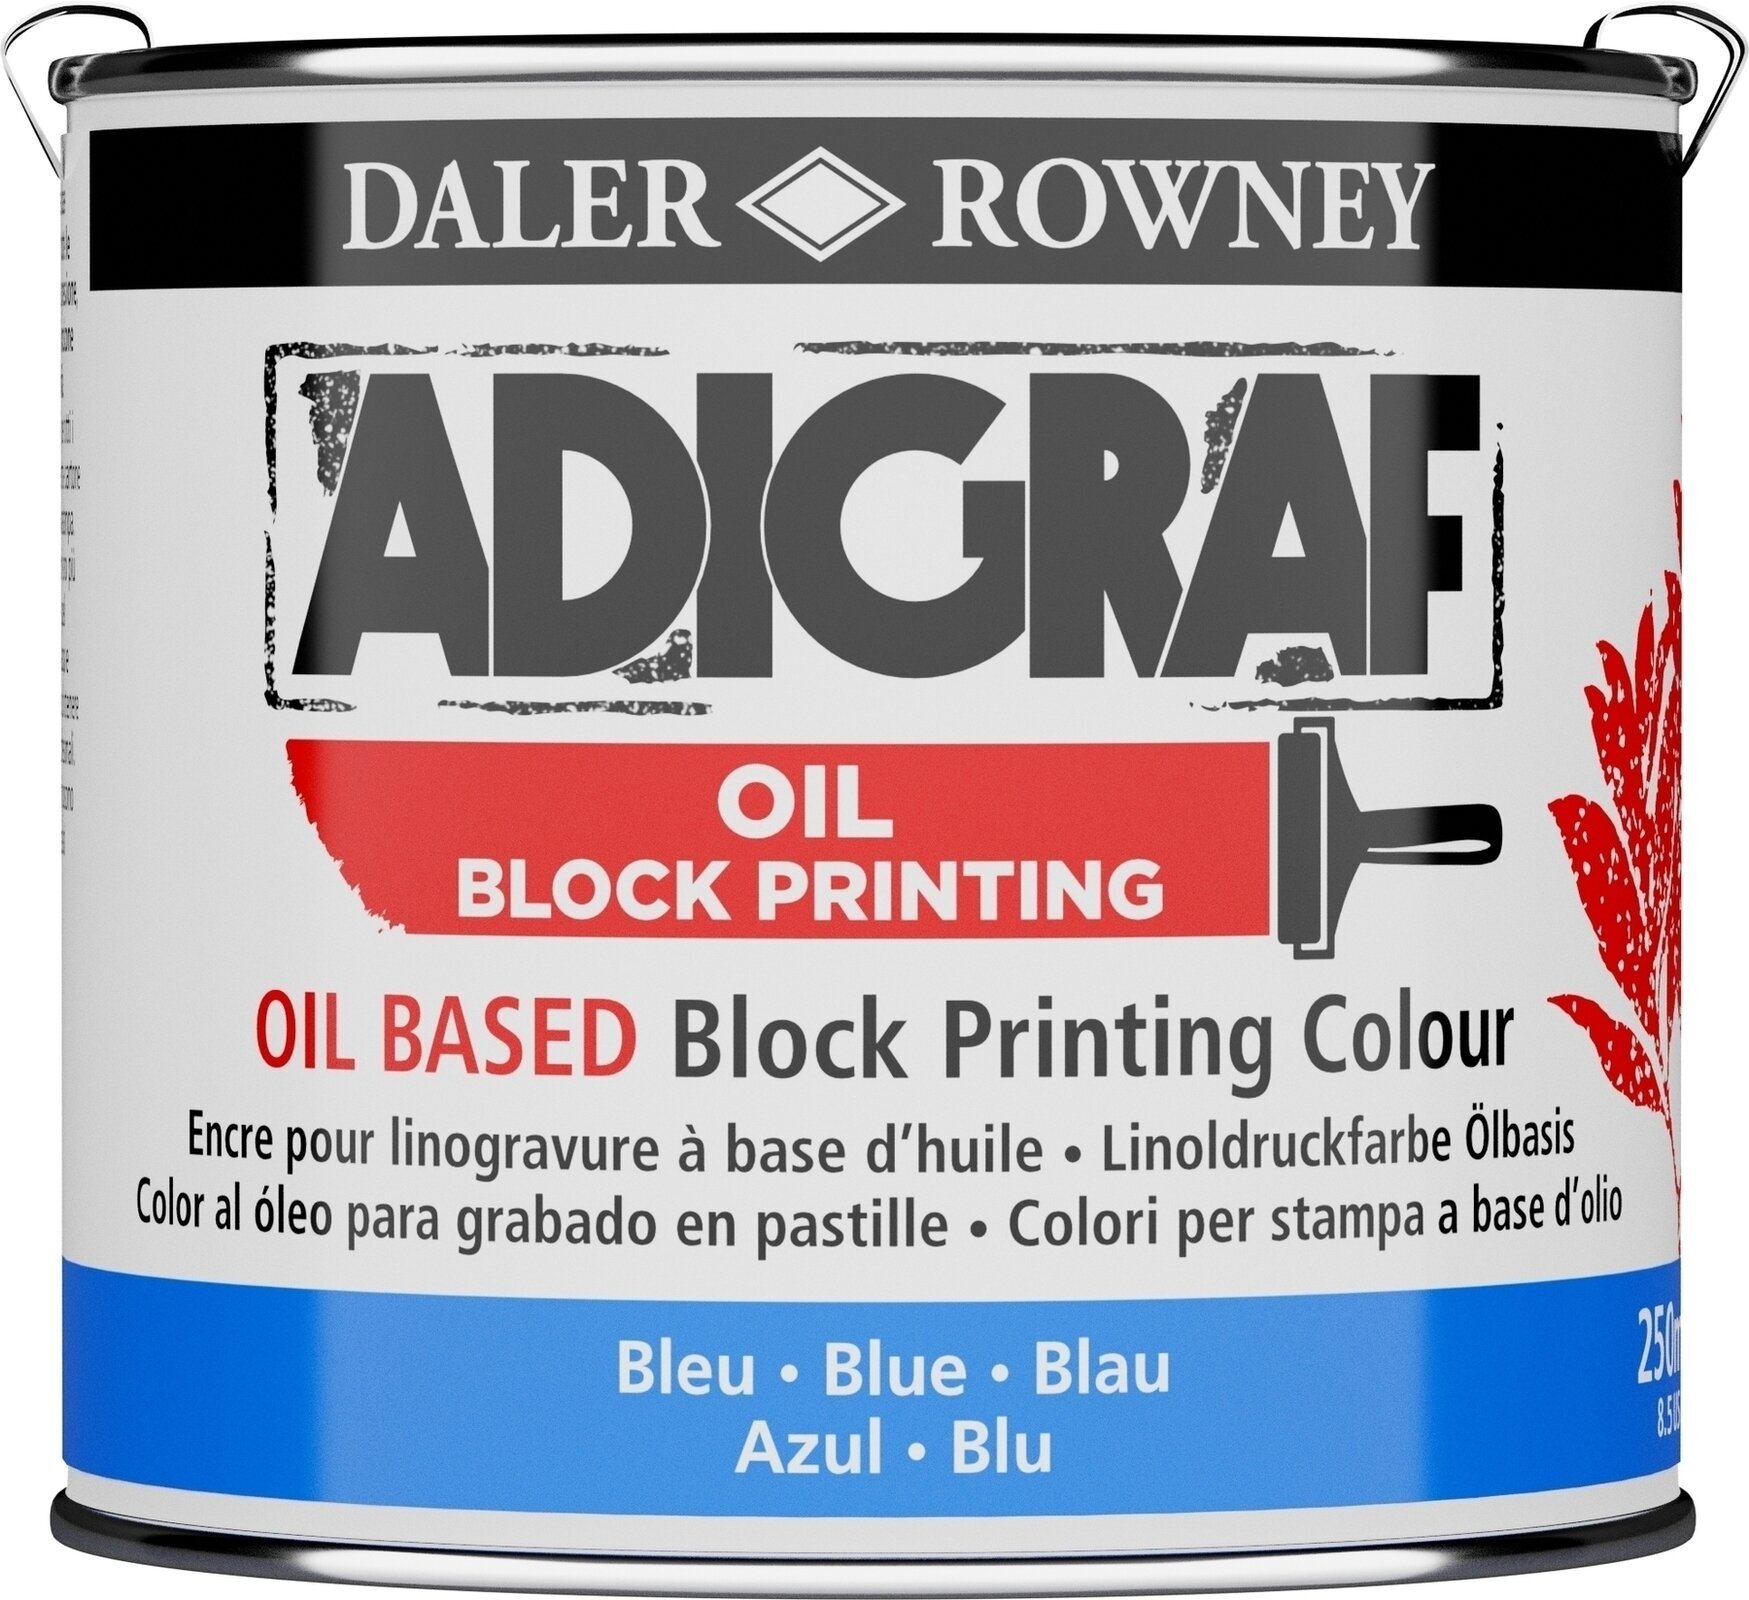 Vernice per linoleografia Daler Rowney Adigraf Block Printing Oil Vernice per linoleografia Blue 250 ml